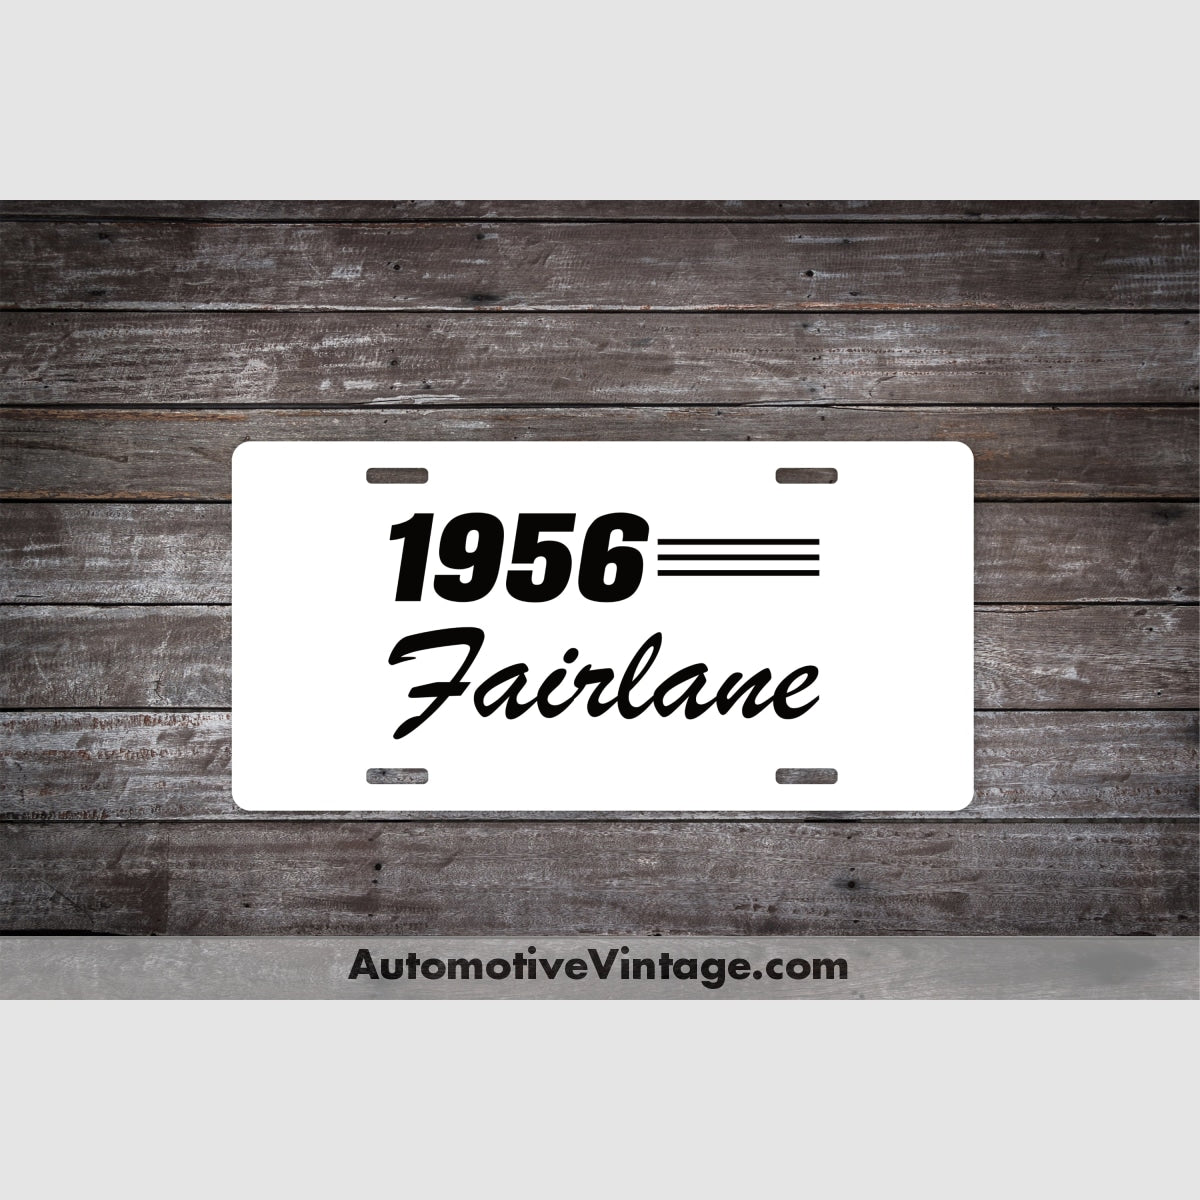 1956 Ford Fairlane Car Model License Plate